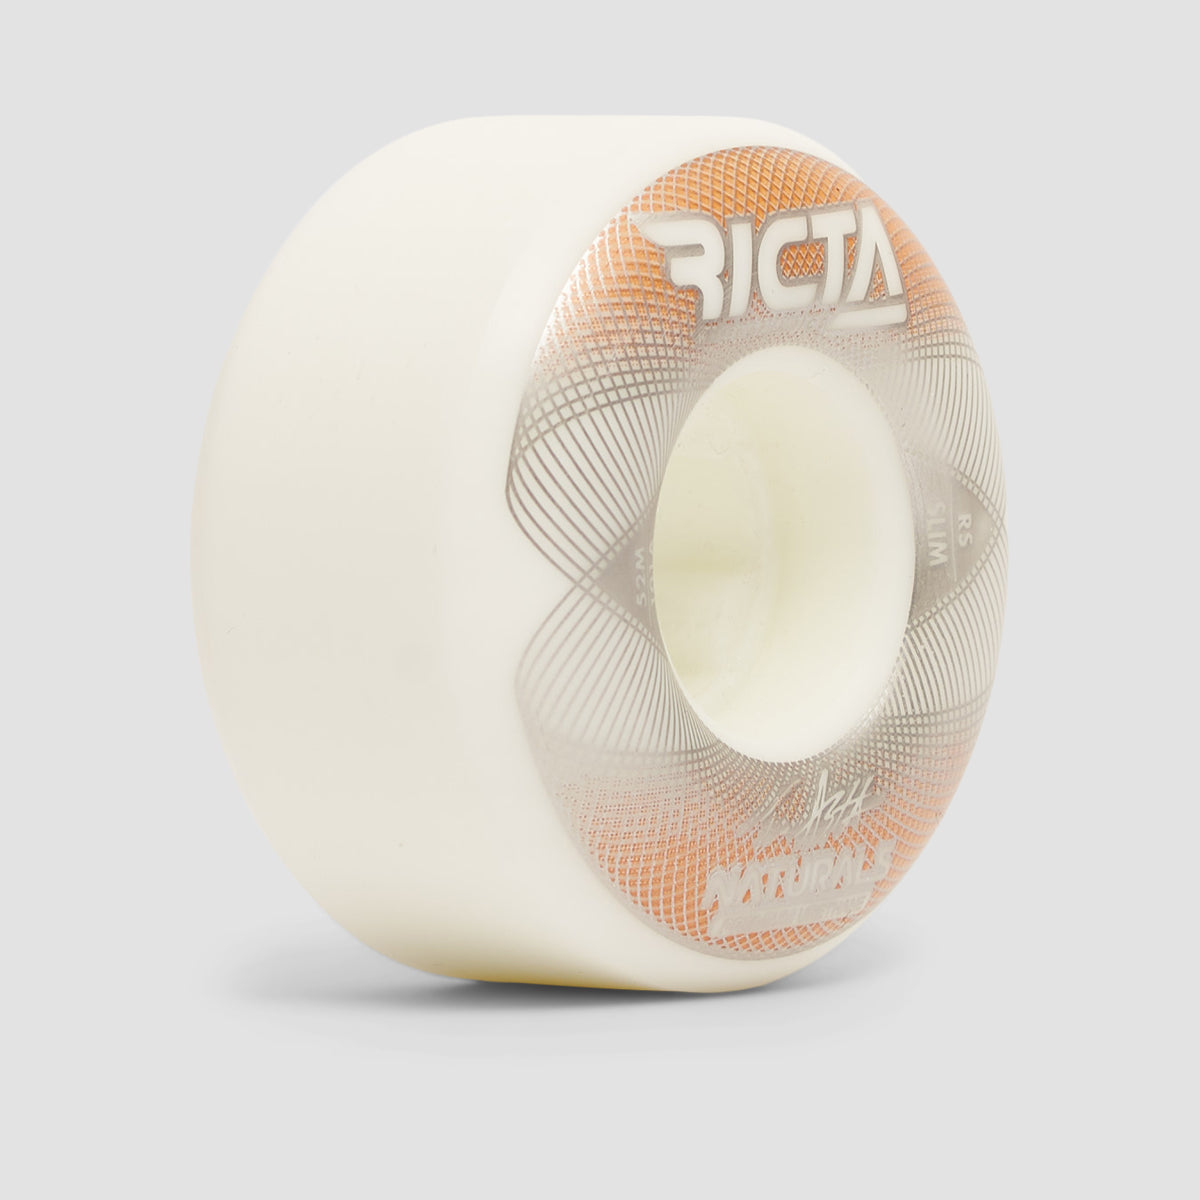 Ricta Geo Naturals Asta Slim 101a Skateboard Wheels - 52mm